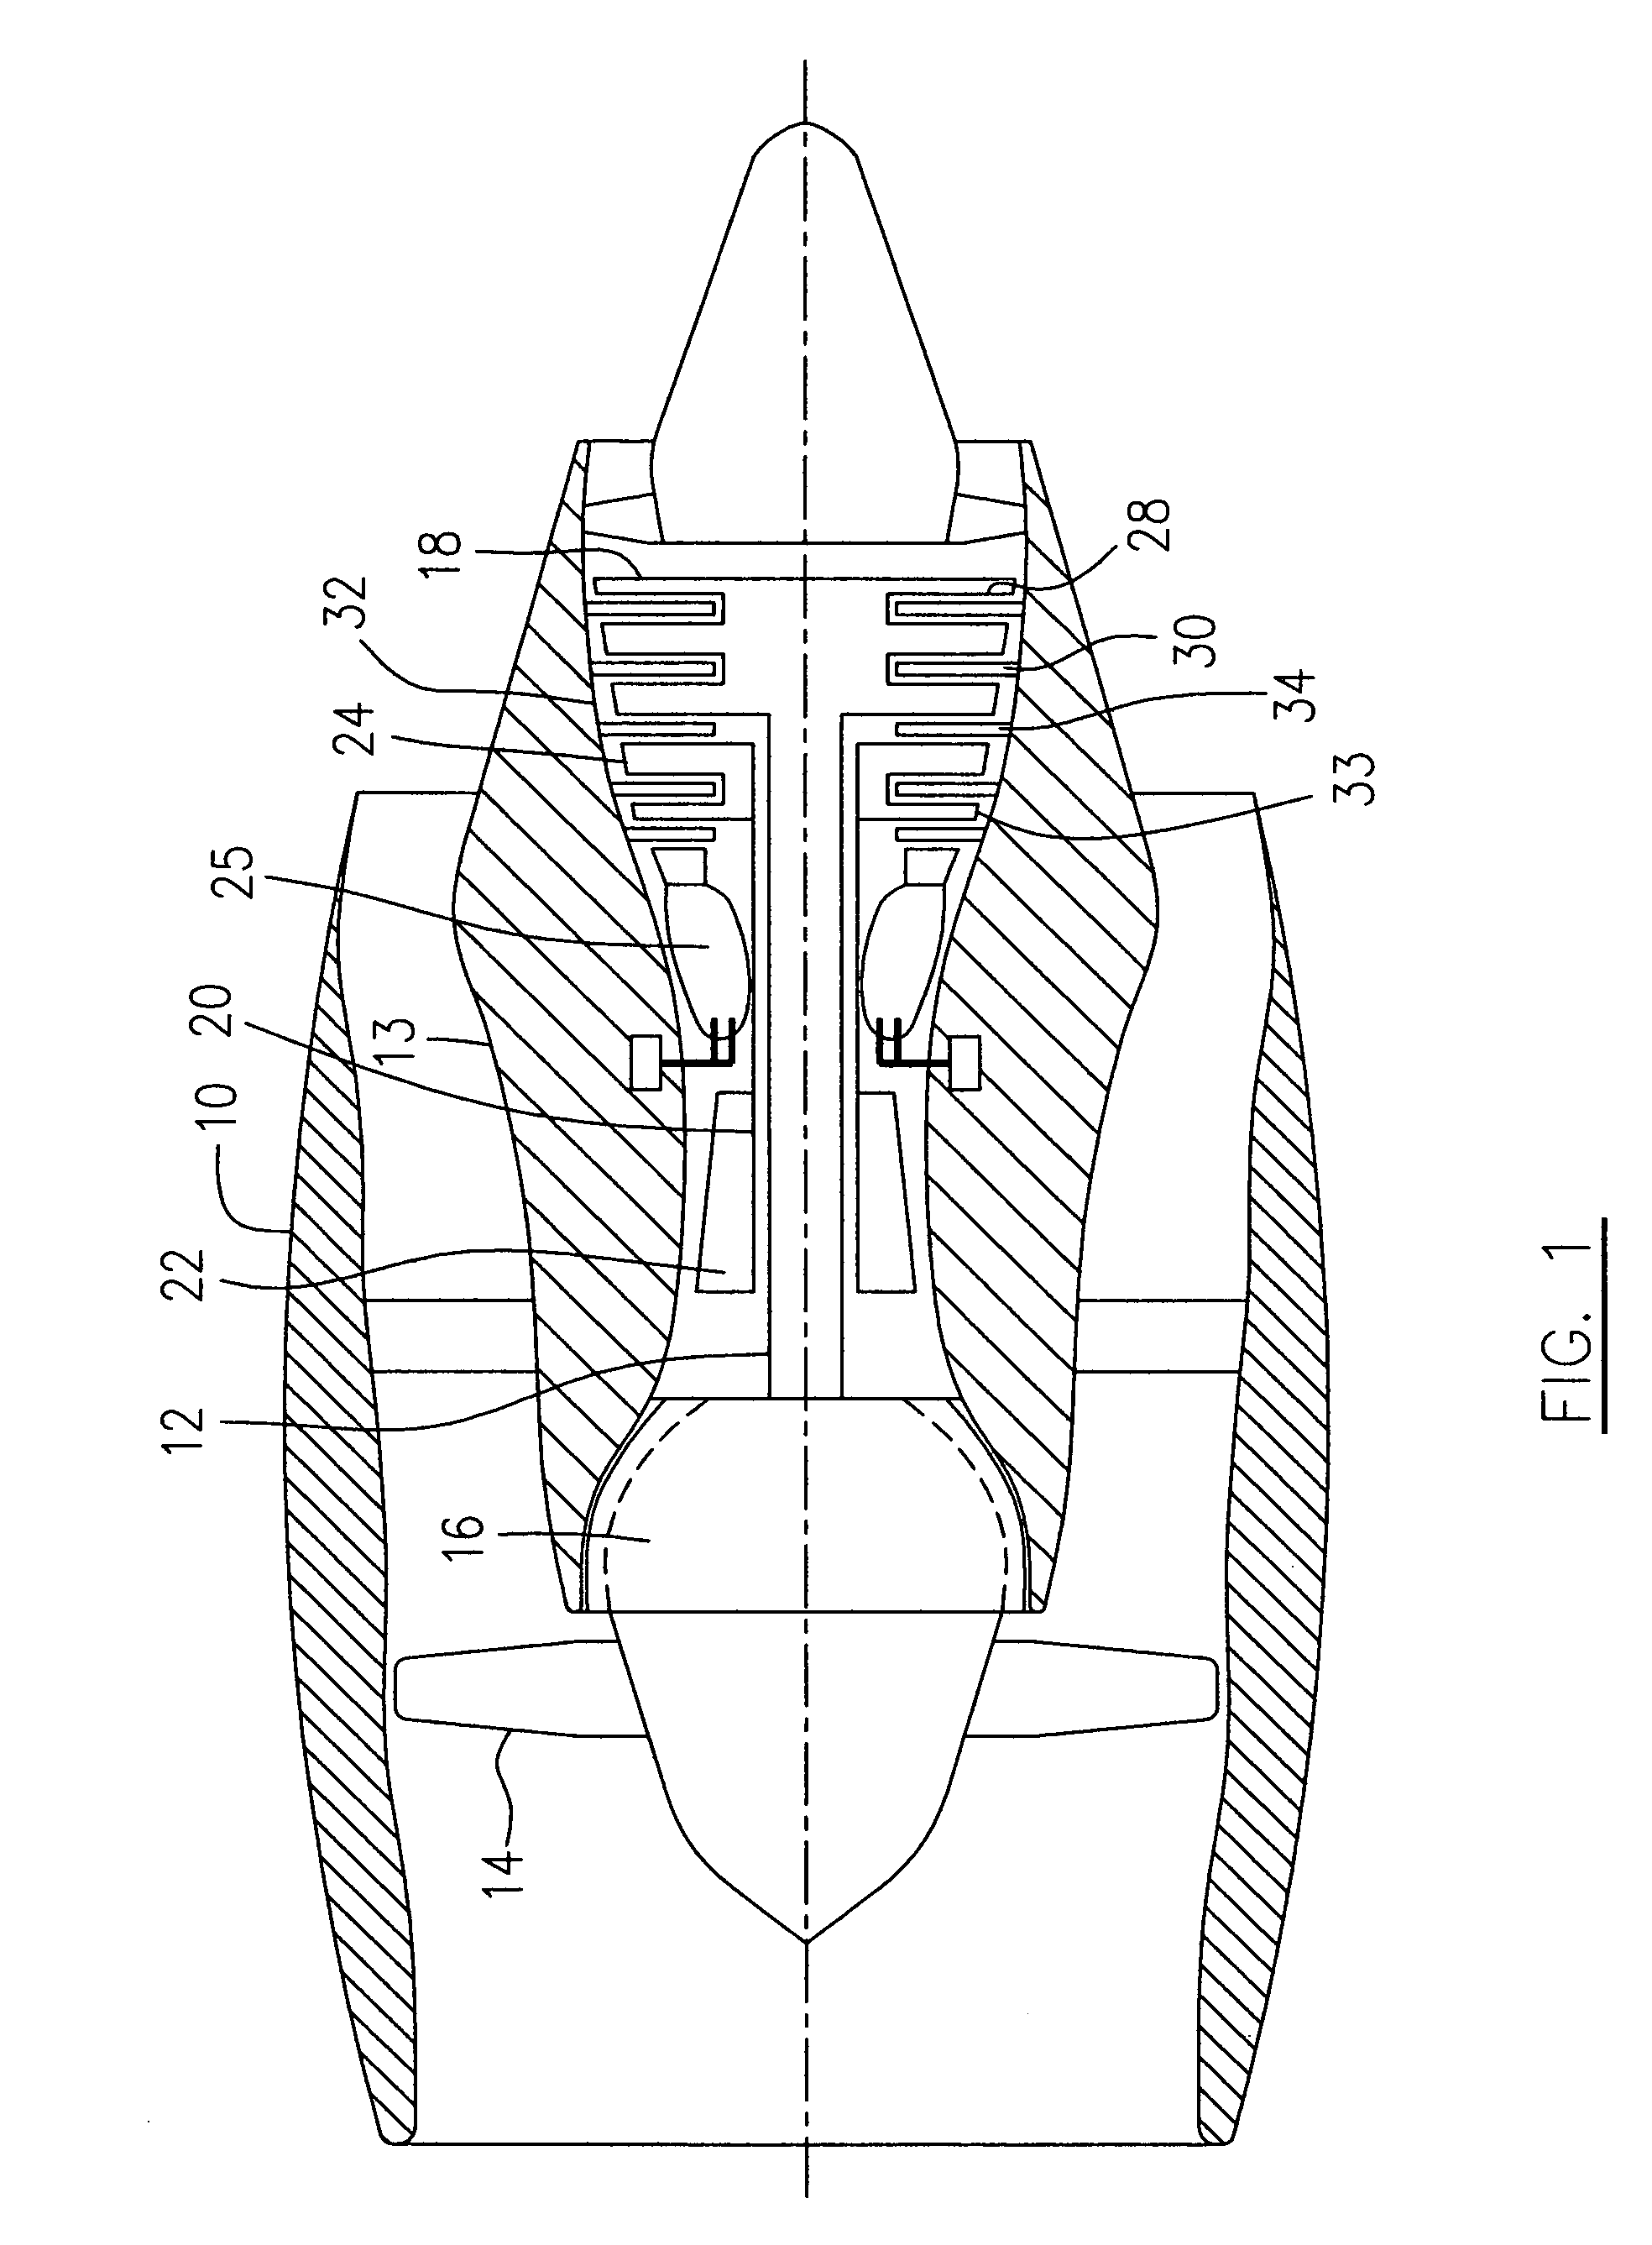 Turbine shroud segment feather seal located in radial shroud legs